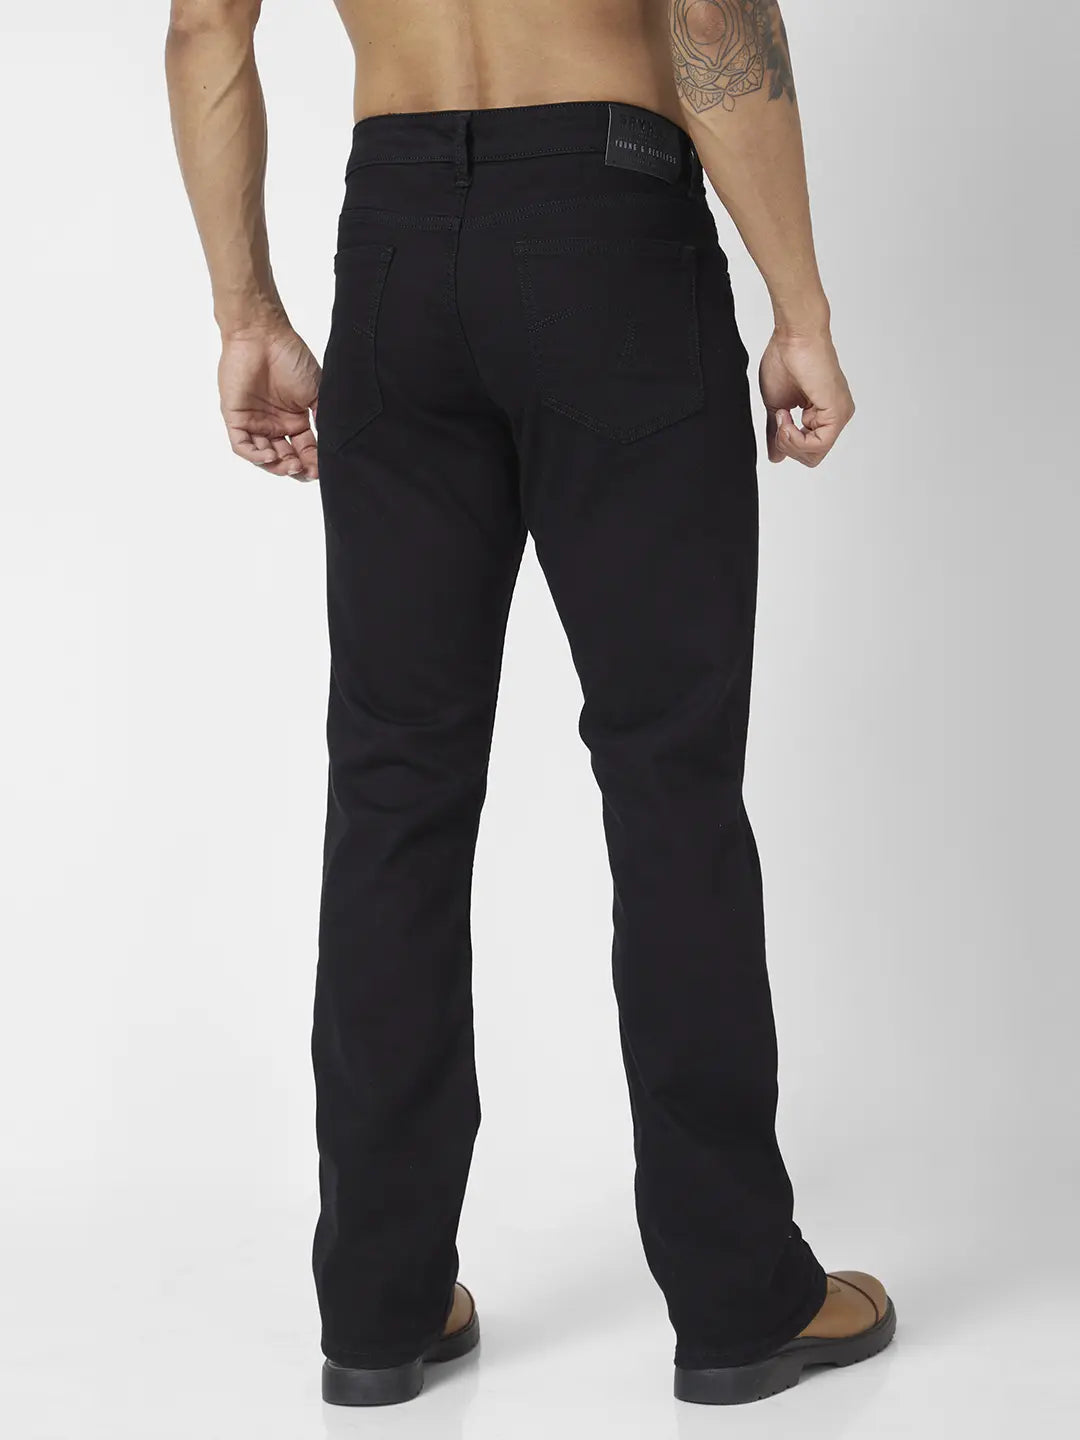 Spykar Men Black Cotton Stretch Comfort Fit Regular Length Clean look Mid Rise Jeans (Rafter)